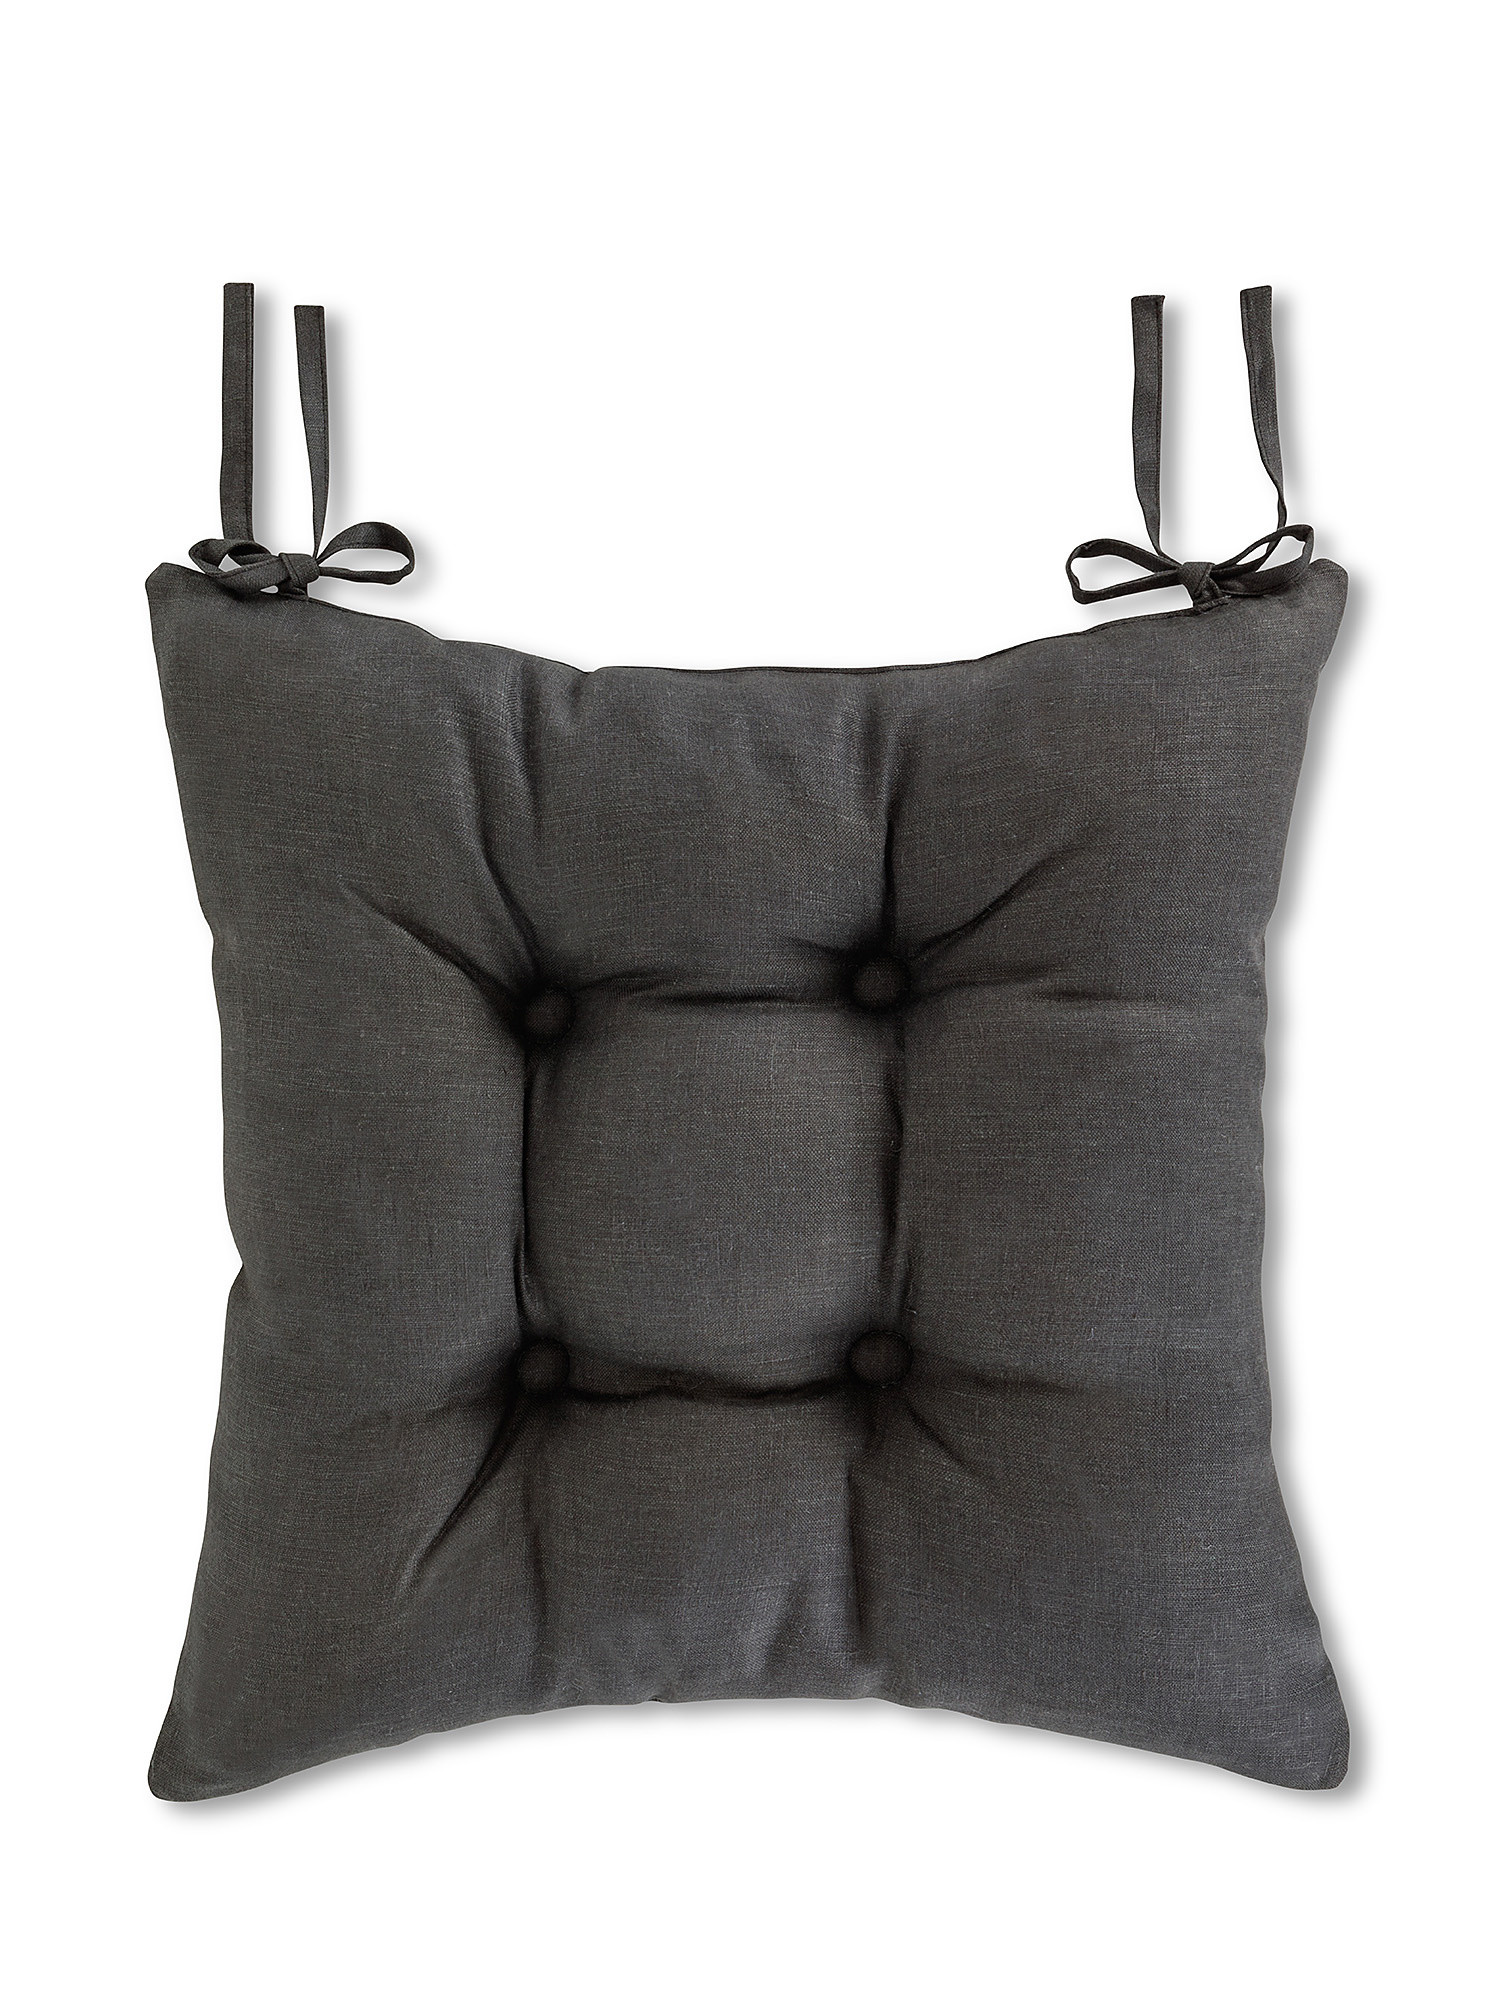 Cuscino da sedia puro lino lavato tinta unita, Grigio scuro, large image number 0